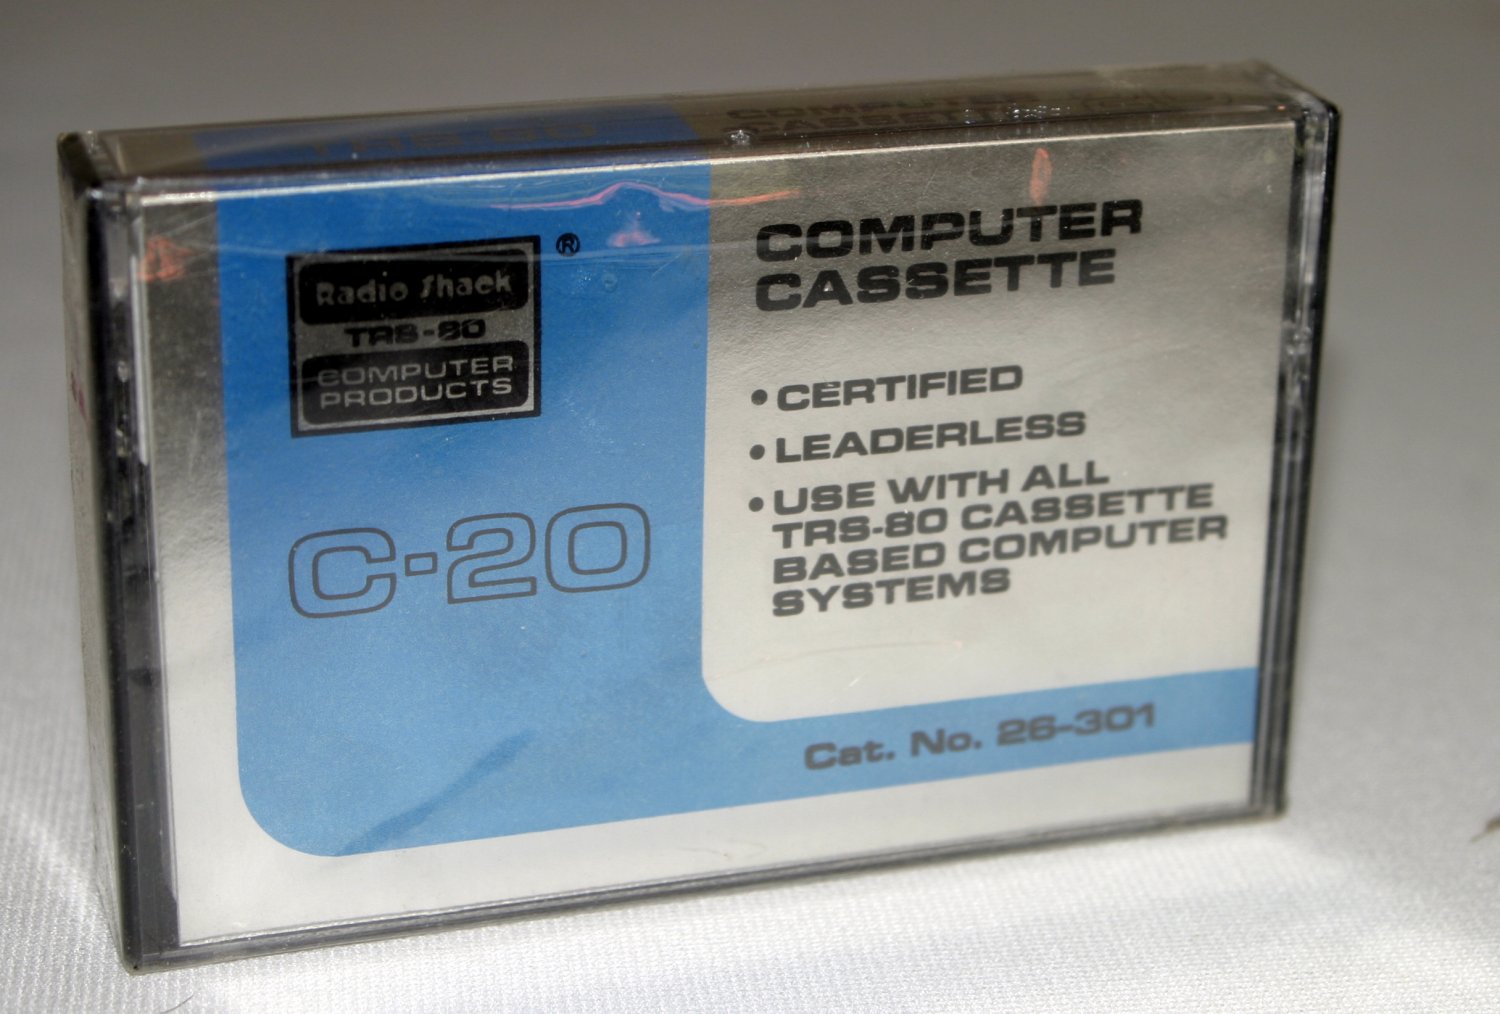 Blank Computer Data Cassette Cat#26-301 TRS-80/Tandy Computer Cassette C-20 